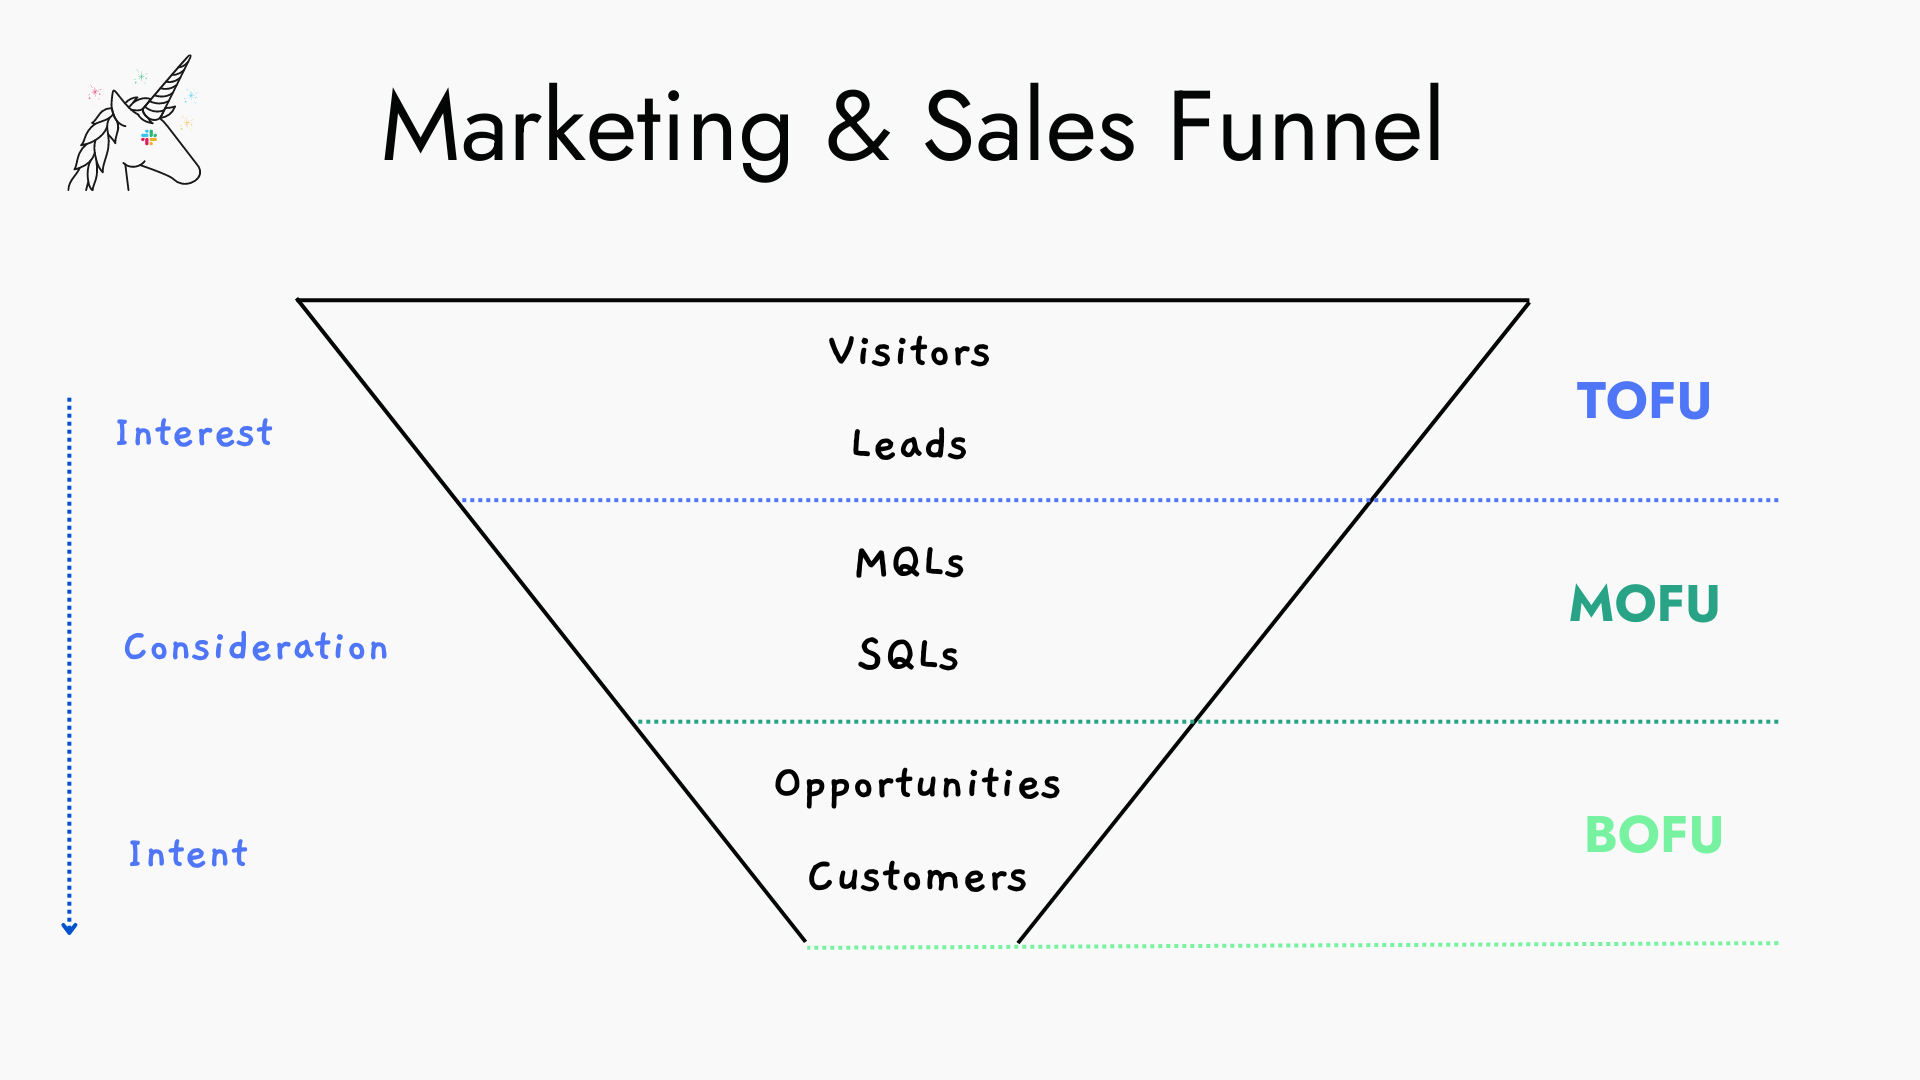 slack's marketing strategy - marketing & sales funnel